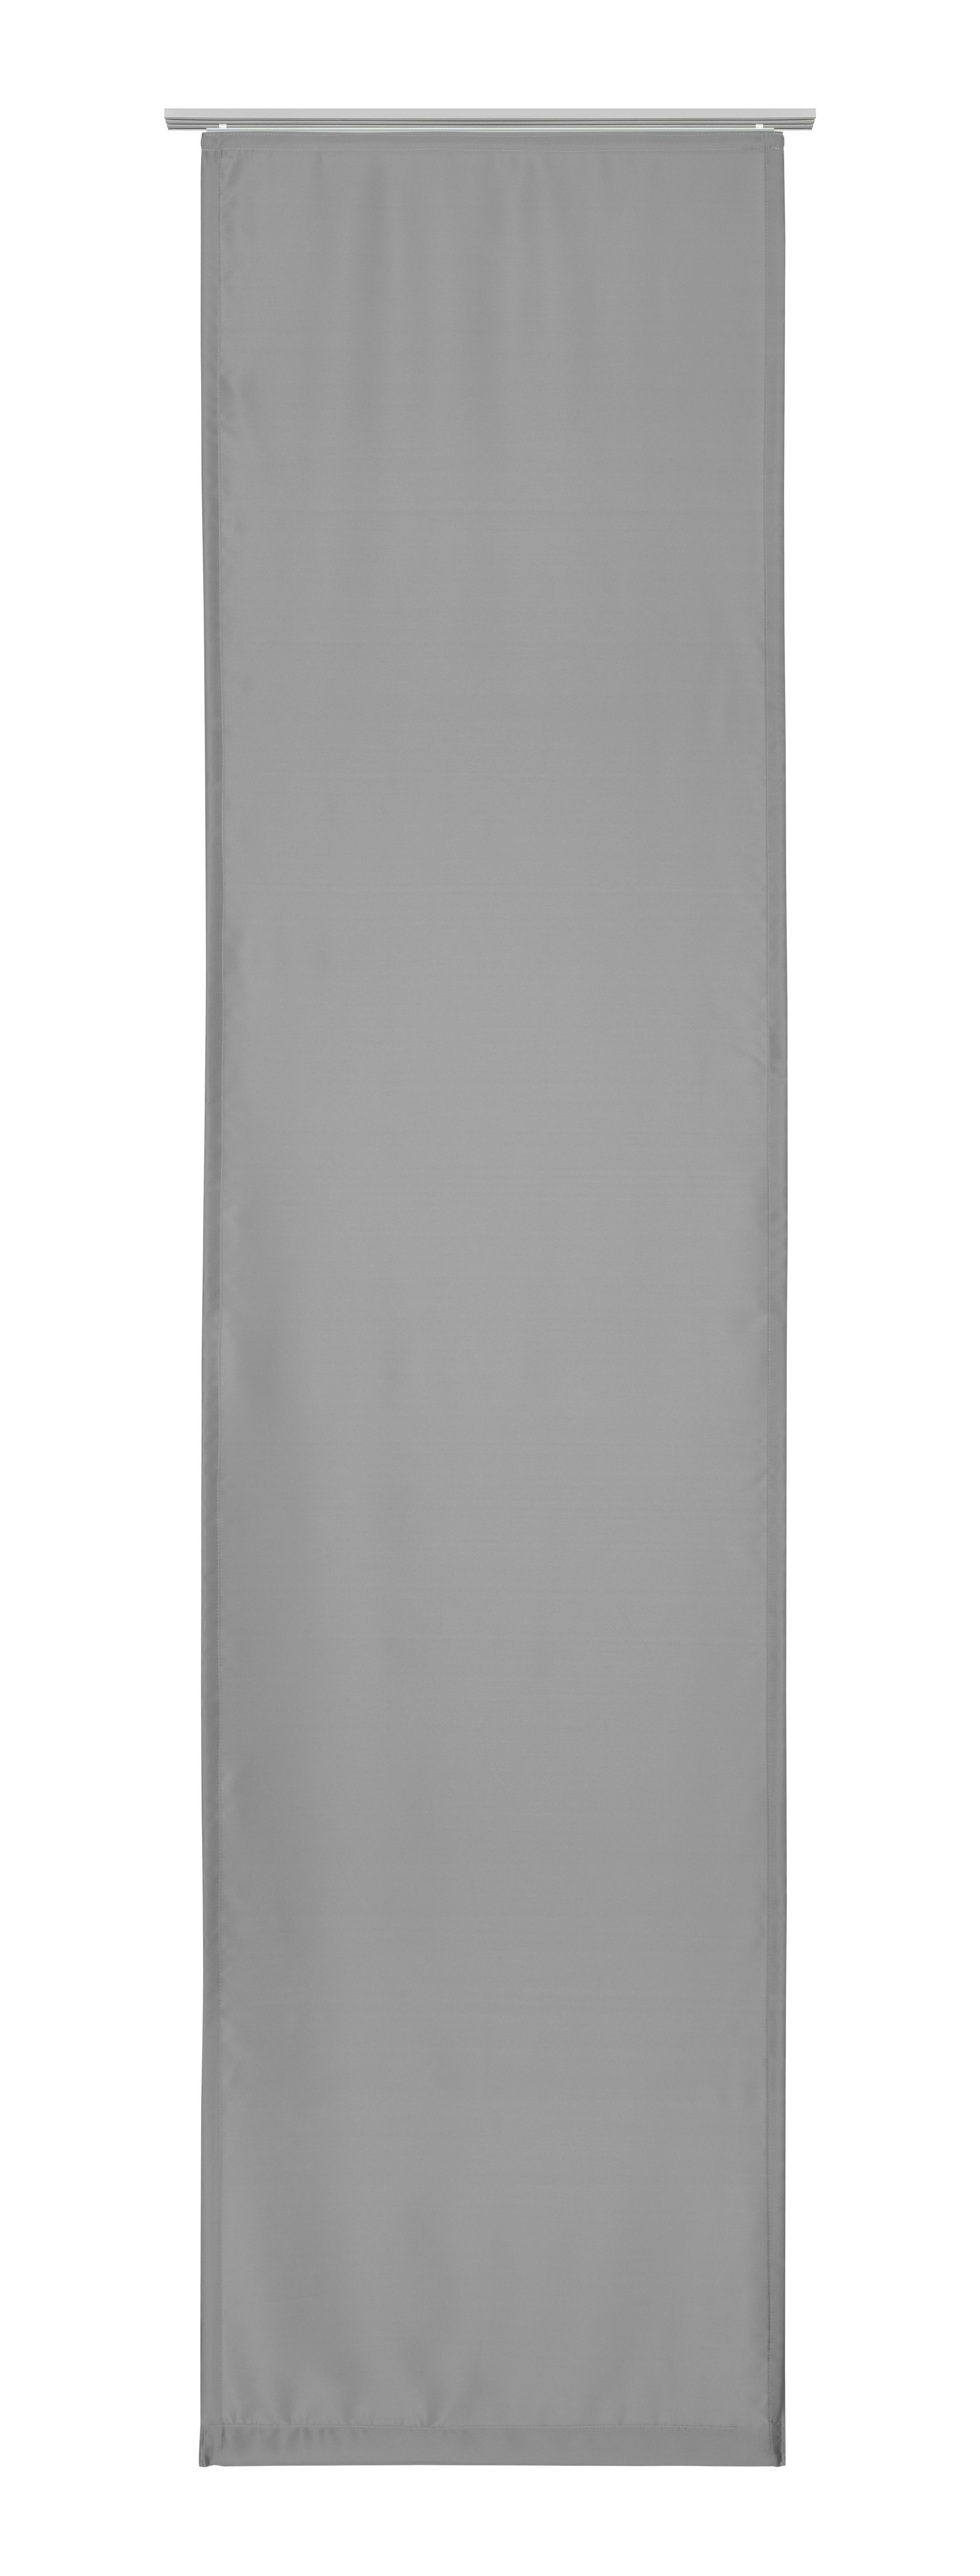 Flächenvorhang Vicky in Silberfarben ca. 60x245cm - Silberfarben, MODERN, Textil (60/245cm) - Modern Living